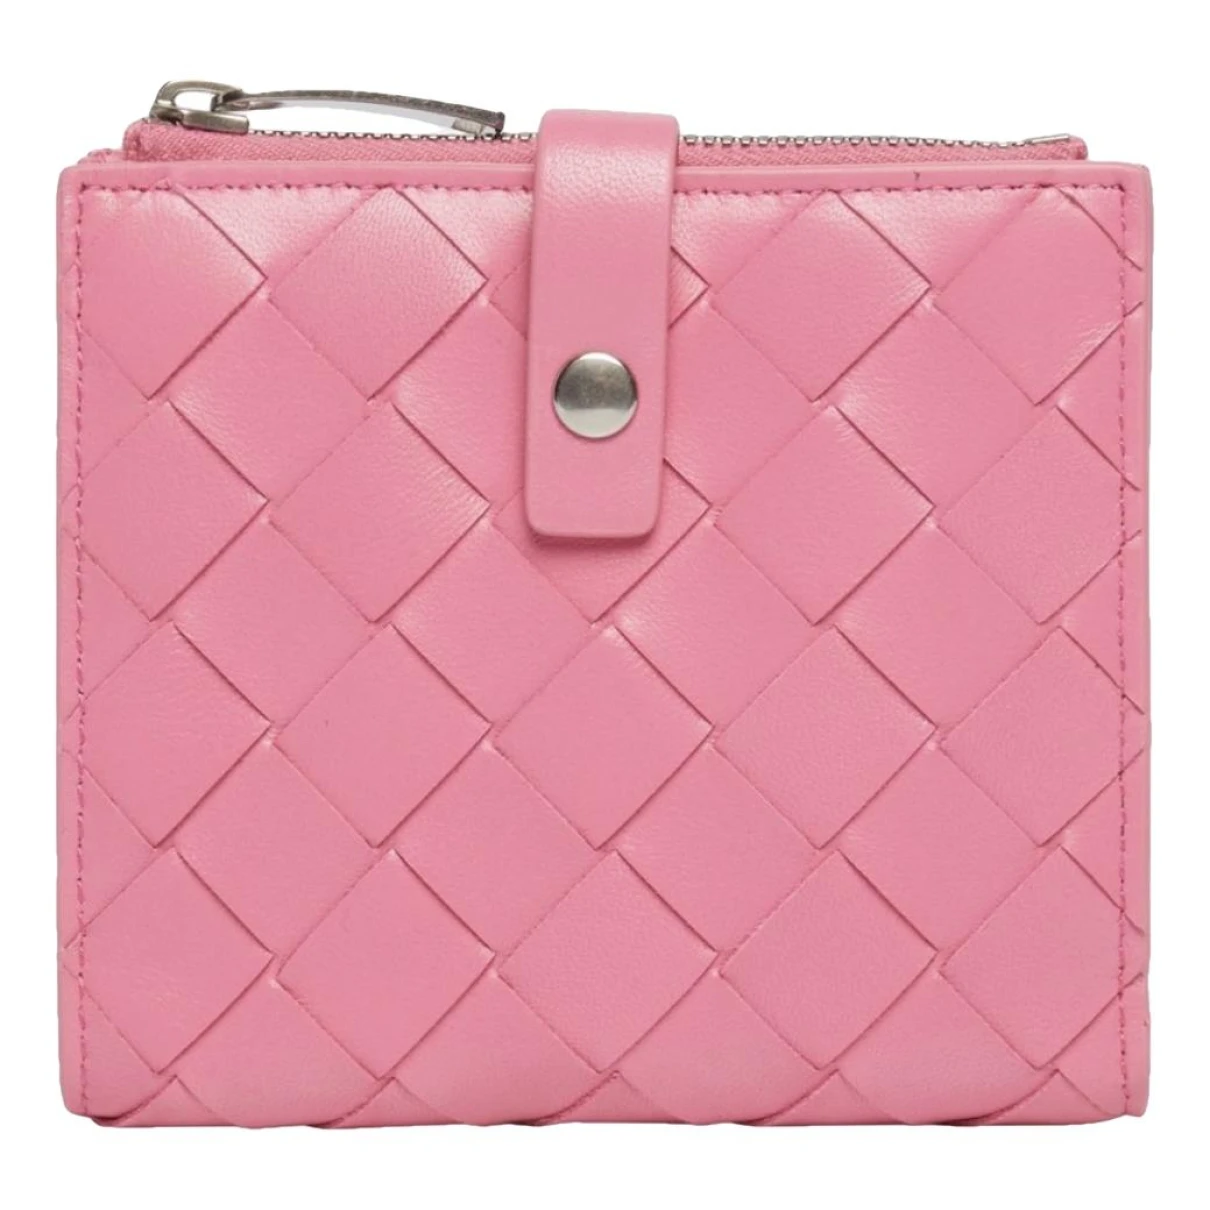 accessories Bottega Veneta purses, wallets & cases for Female Leather. Used condition